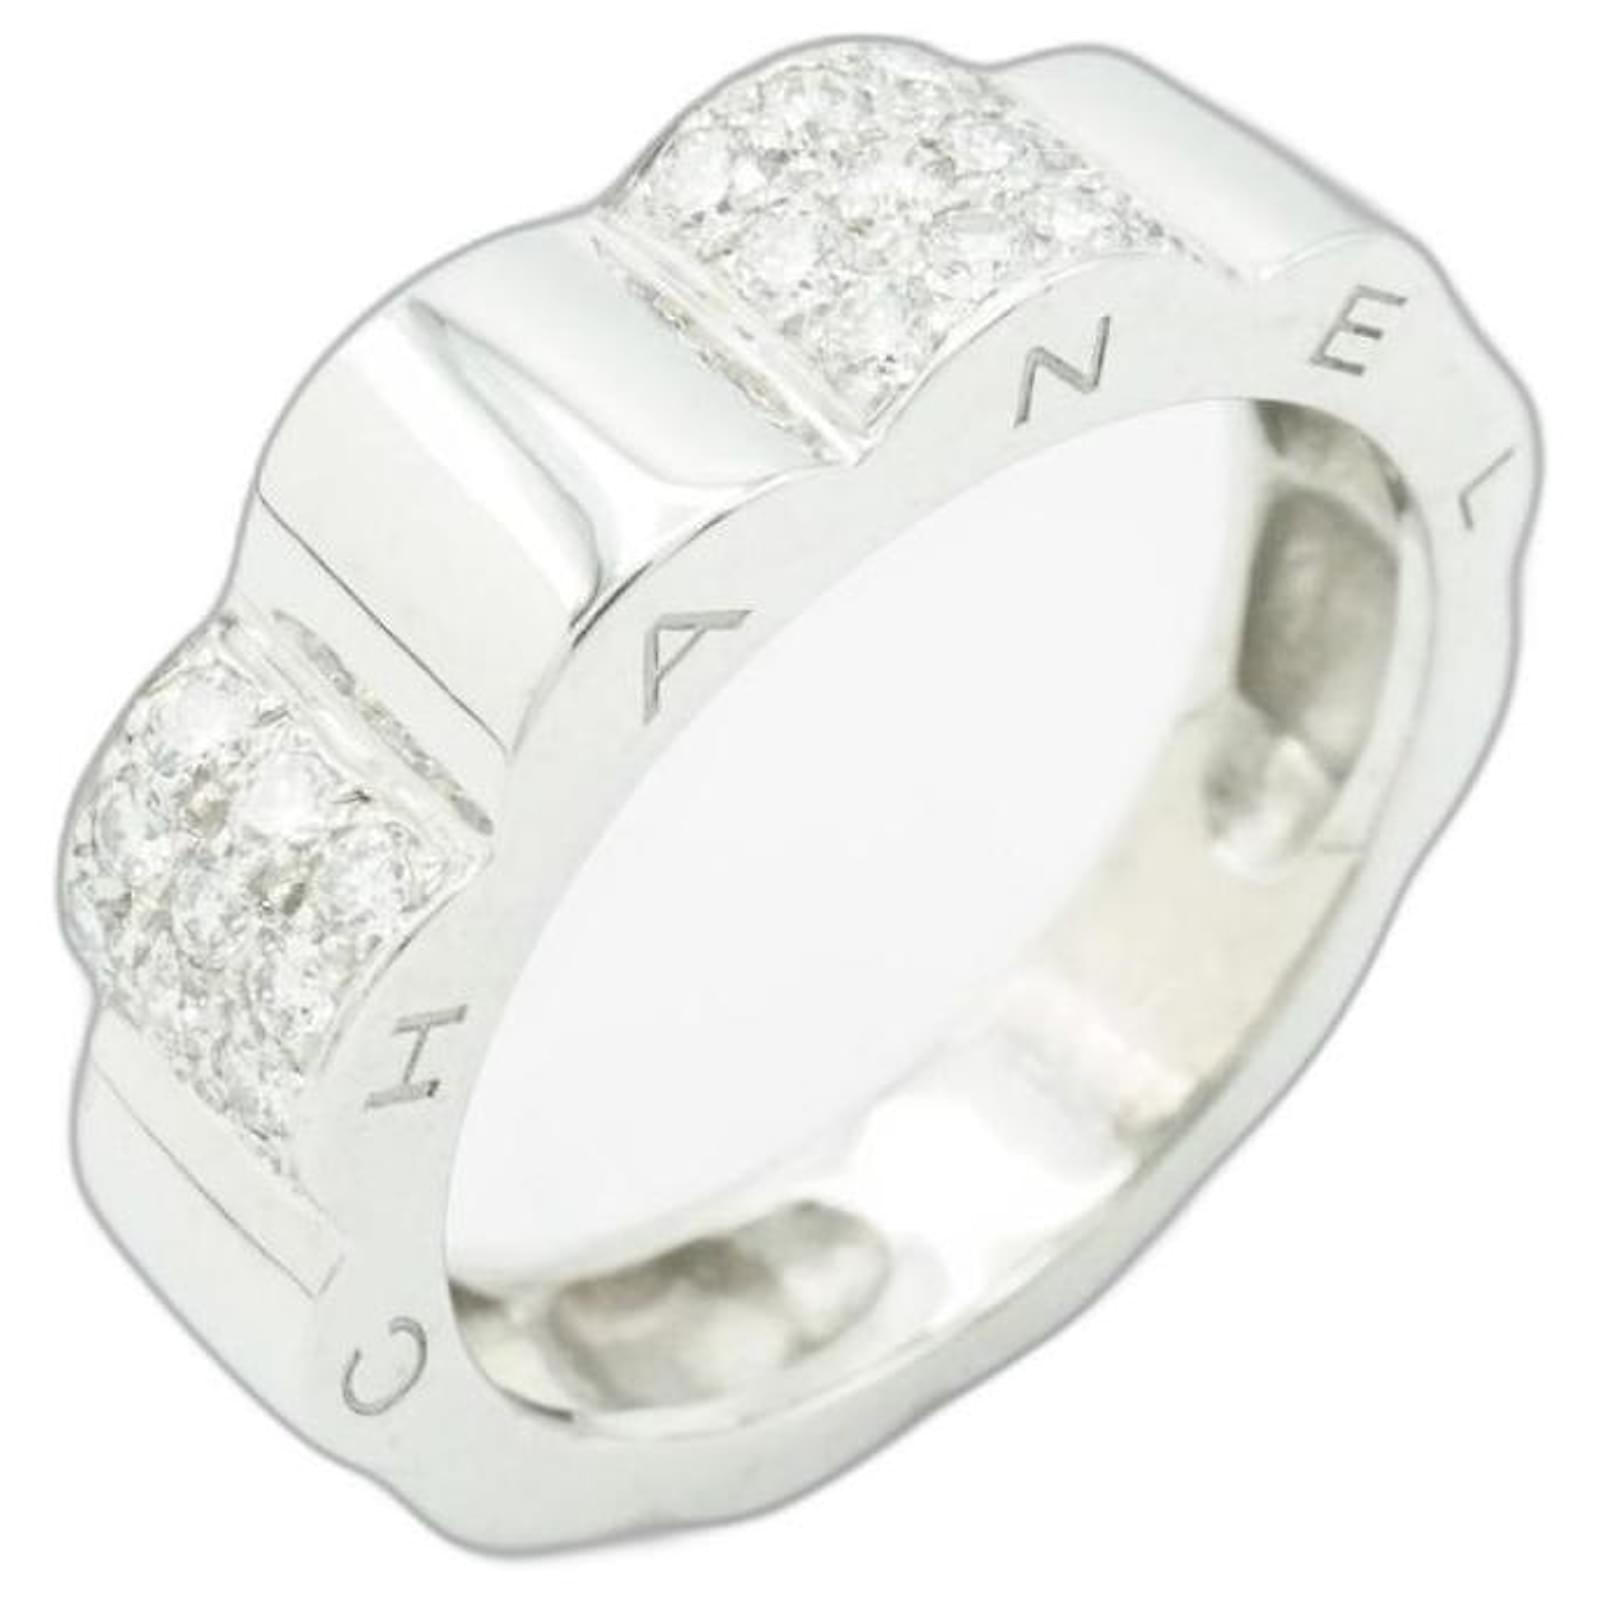 Camelia Chanel ring 1932 T 55 WHITE GOLD 18K & 167 diamants 2.31CT